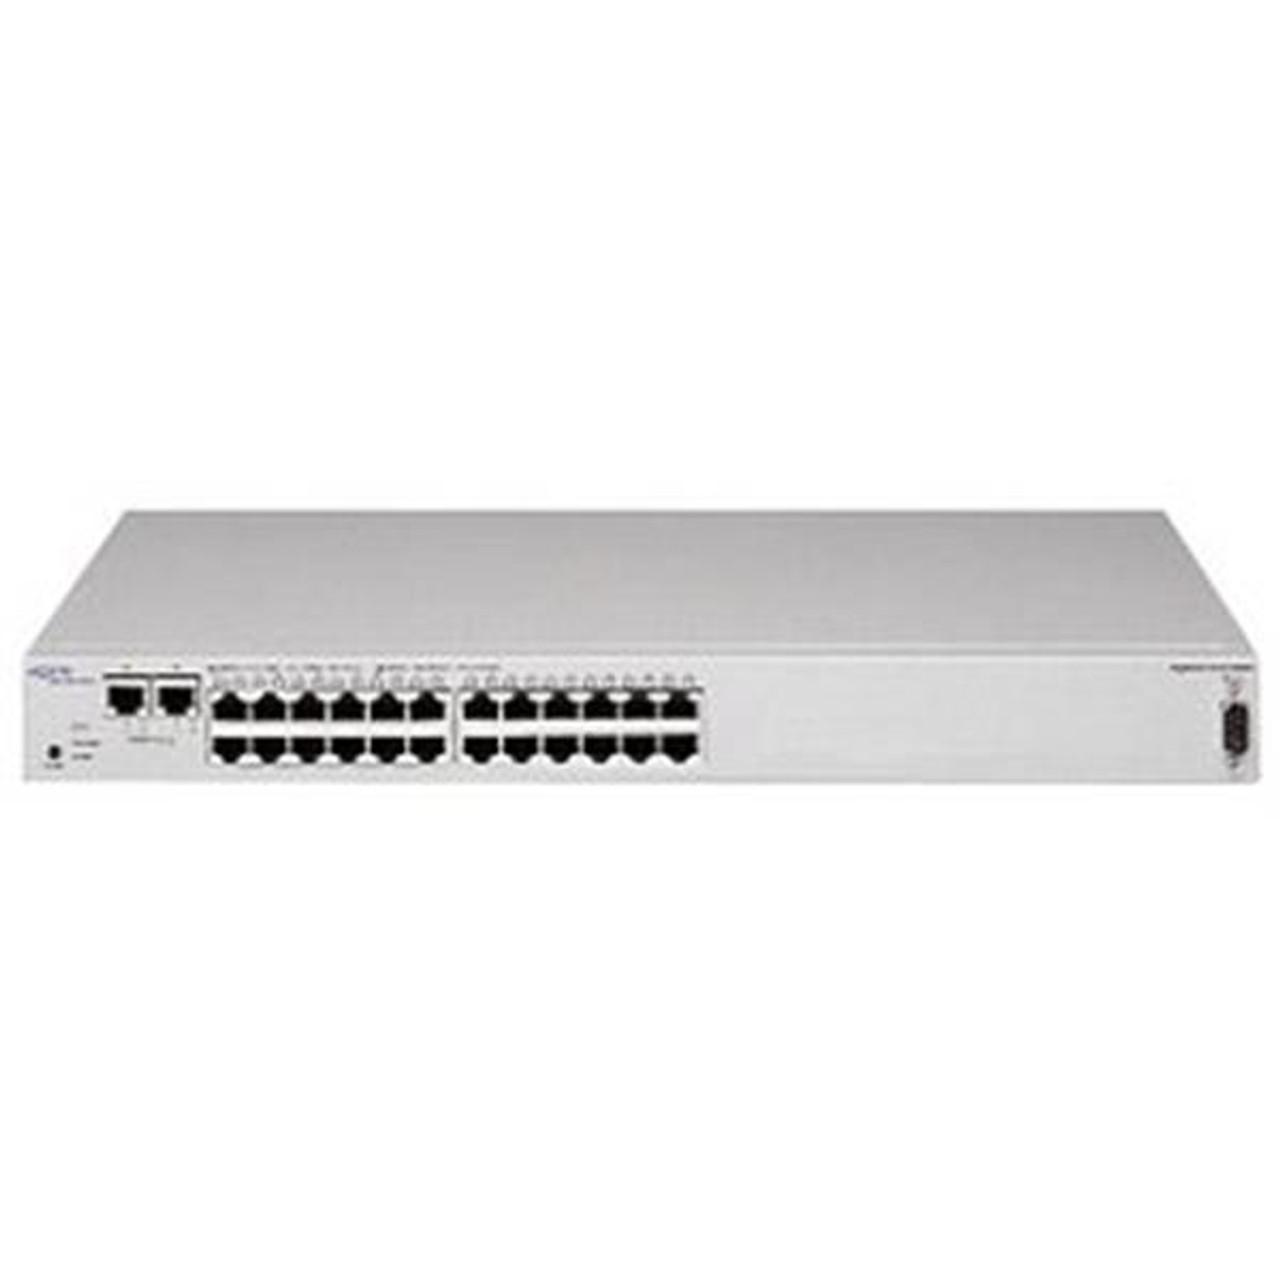 AL2012E46 Nortel BayStack 325-24G 24x 10/100Base-TX ports RJ-45 plus 2x 10/100/1000Base-TX uplink ports Fast Ethernet Switch (Refurbished)